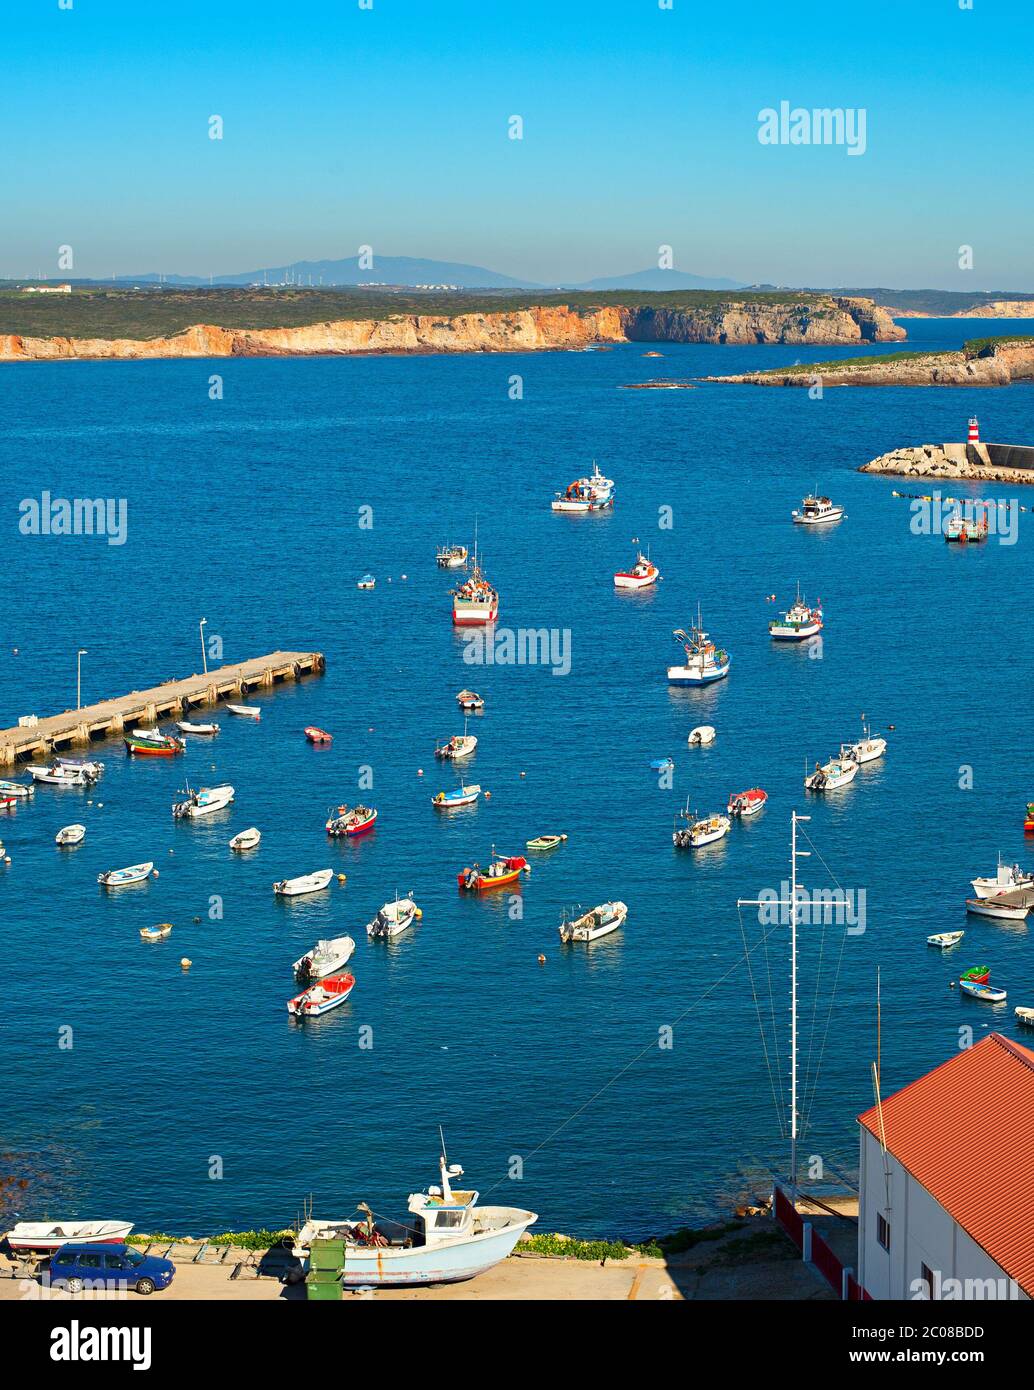 Port d'Algarve, Portugal Banque D'Images